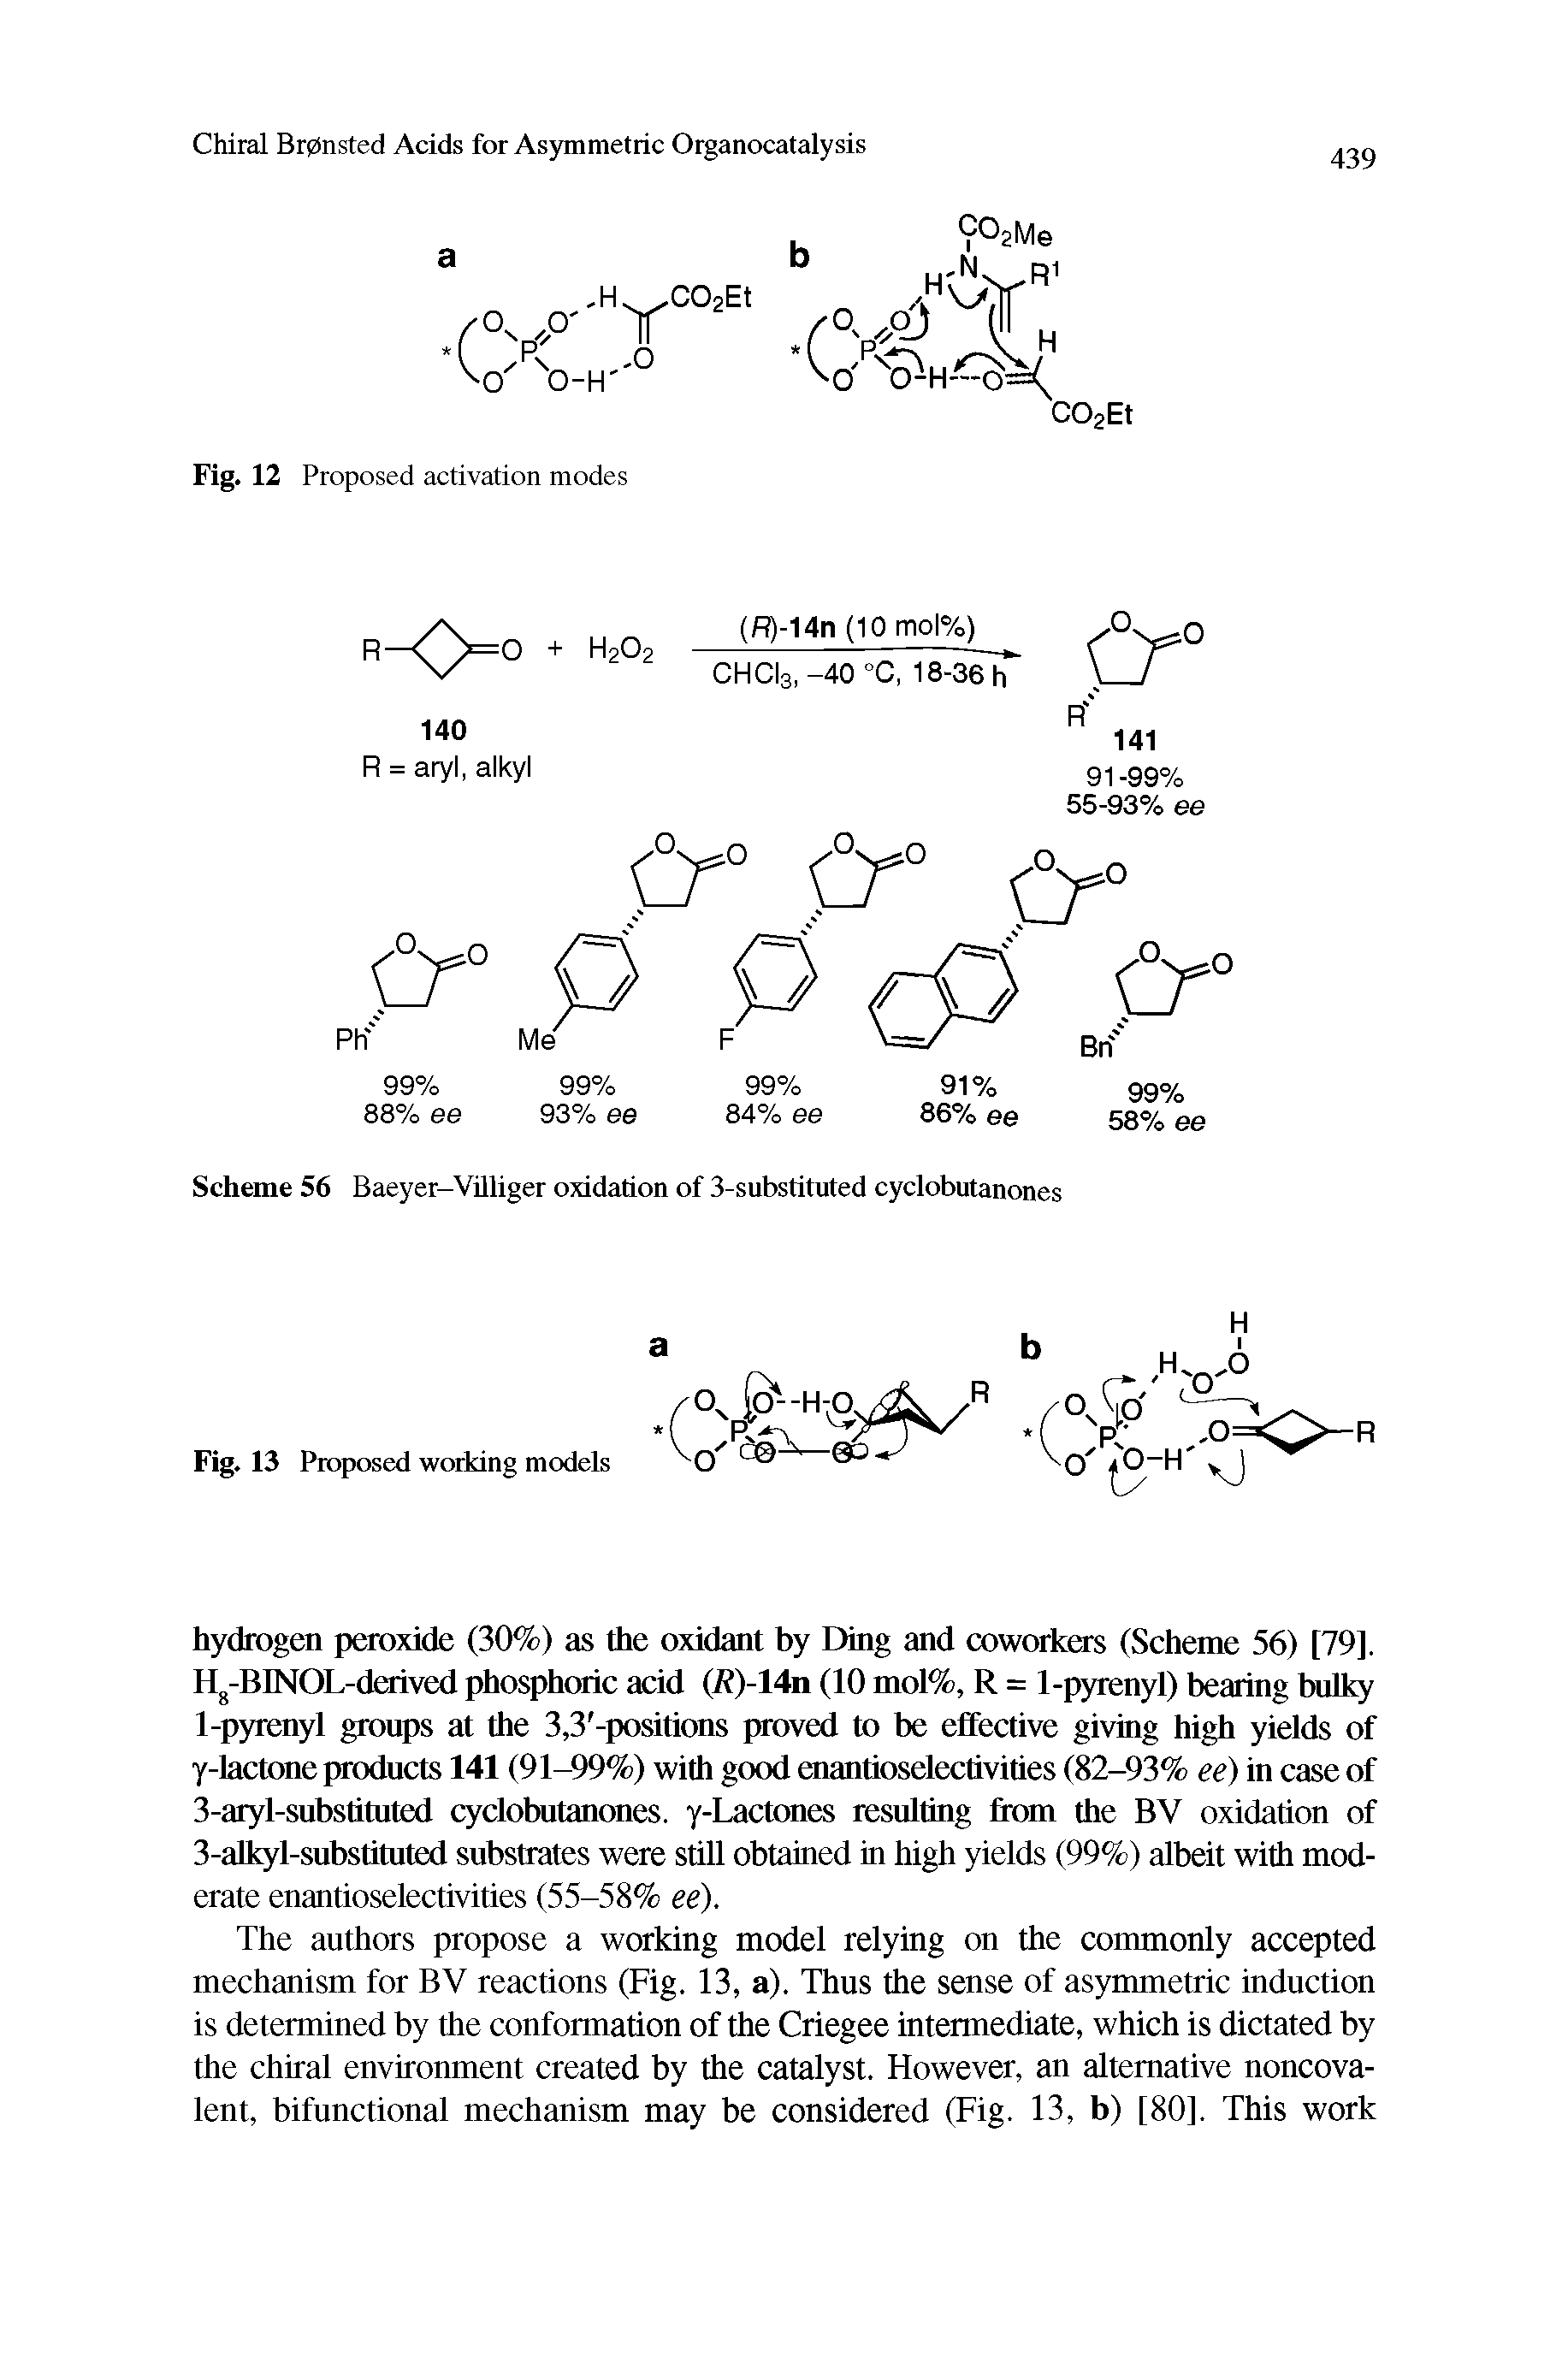 Scheme 56 Baeyer-Villiger oxidation of 3-substituted cyclobutanones...